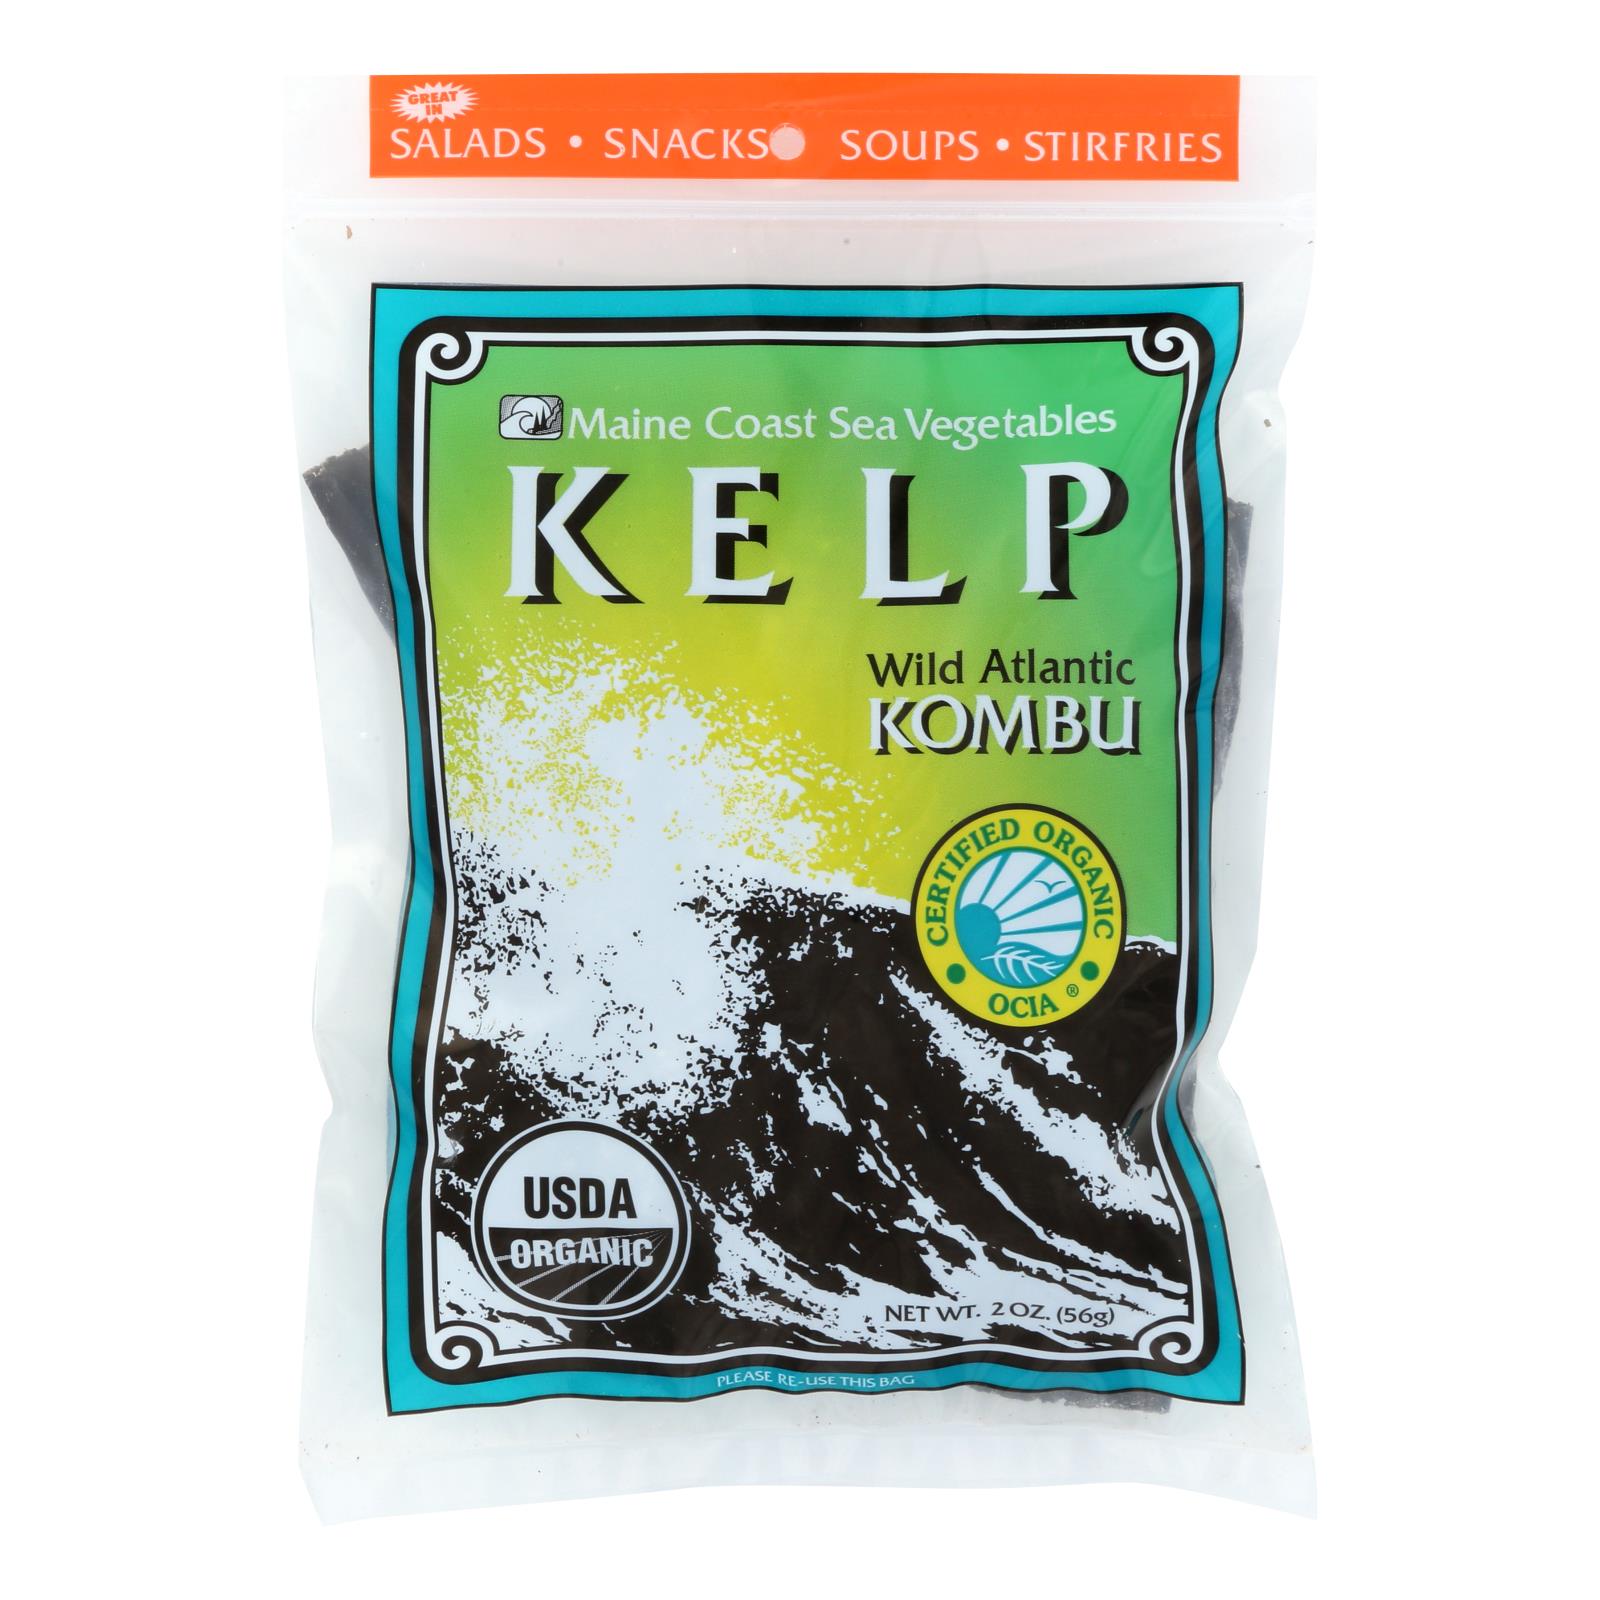 Côte du Maine, Maine Coast Organic Sea Vegetables - Kelp - Wild Atlantic Kombu - Whole Leaf - 2 oz (paquet de 3)